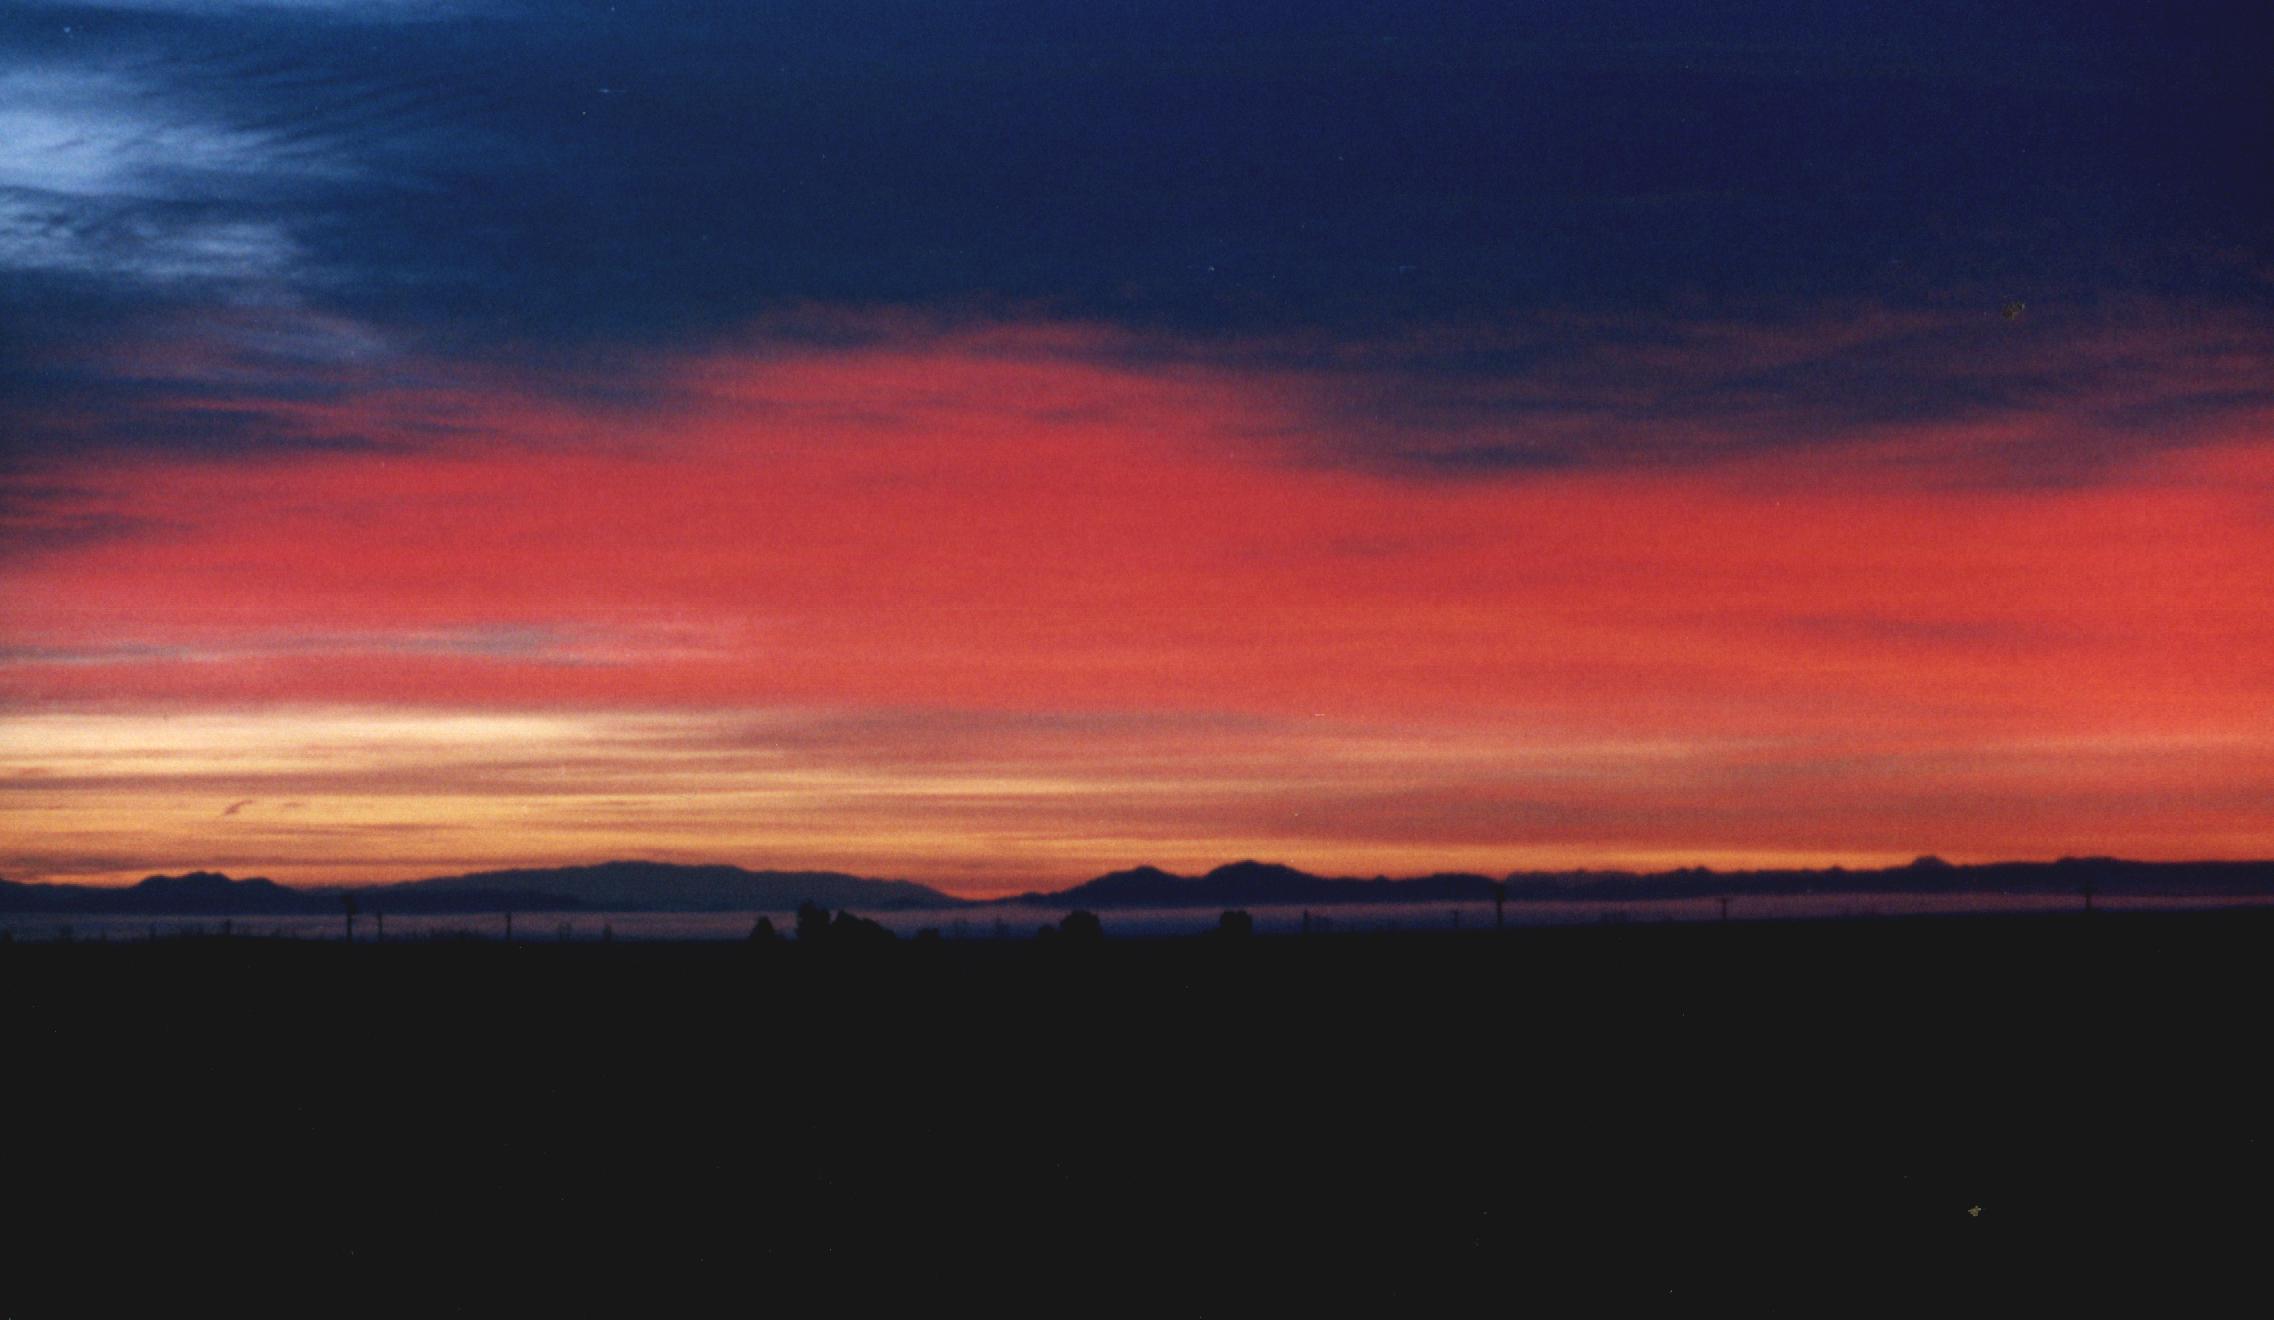 Beautiful Sunrise Looking Over
Ridgecrest In The East
Taken By Cathy Padgett Schmeer